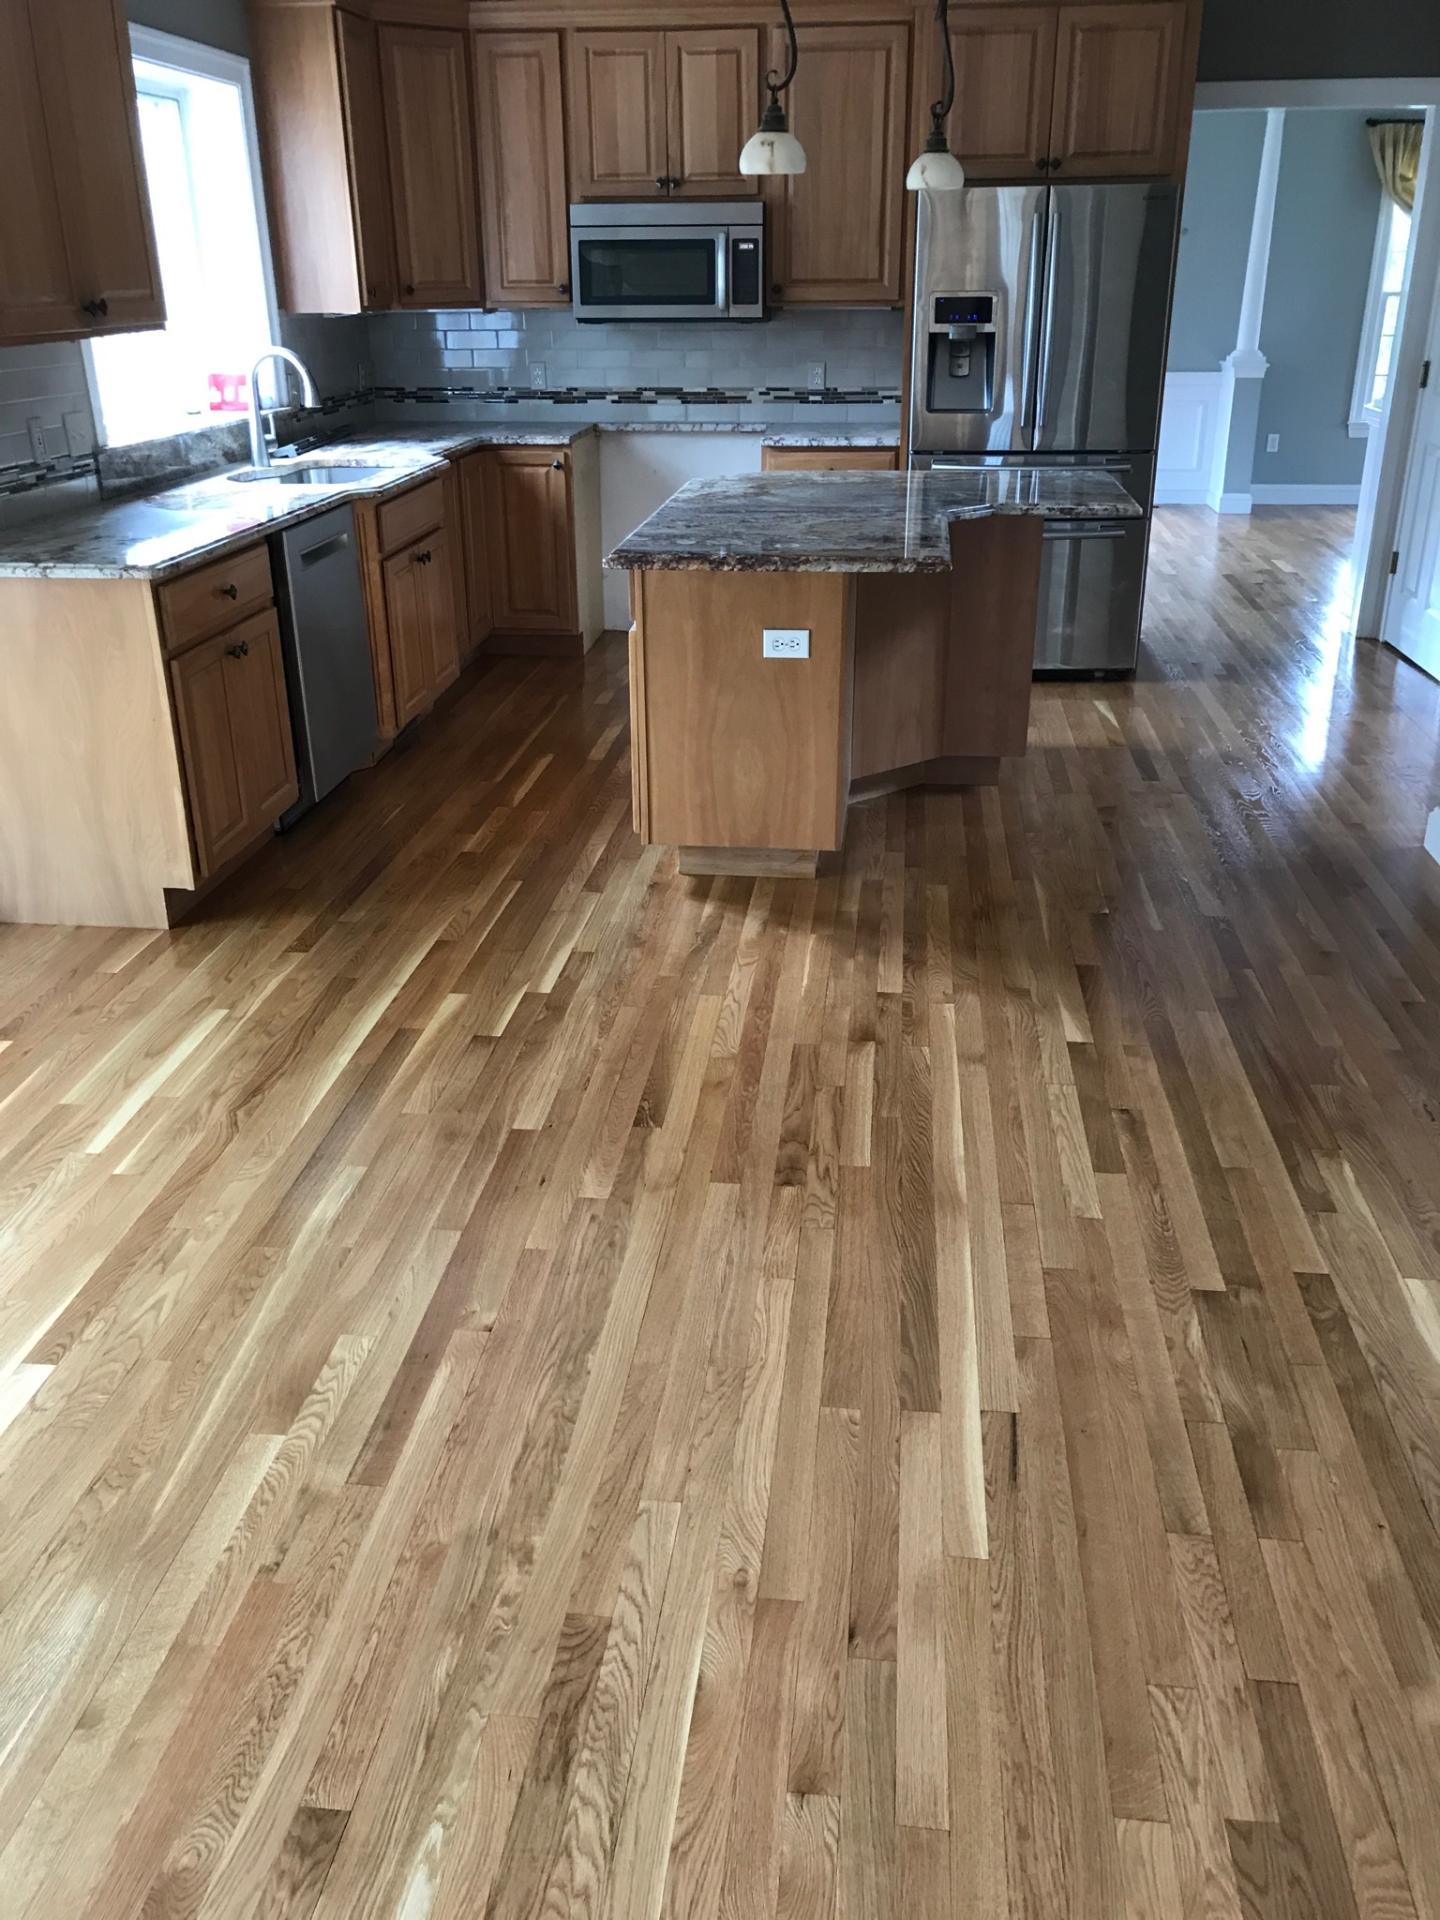 Natural White Oak Floors with Oil Based Finish | Central Mass Hardwood Inc.